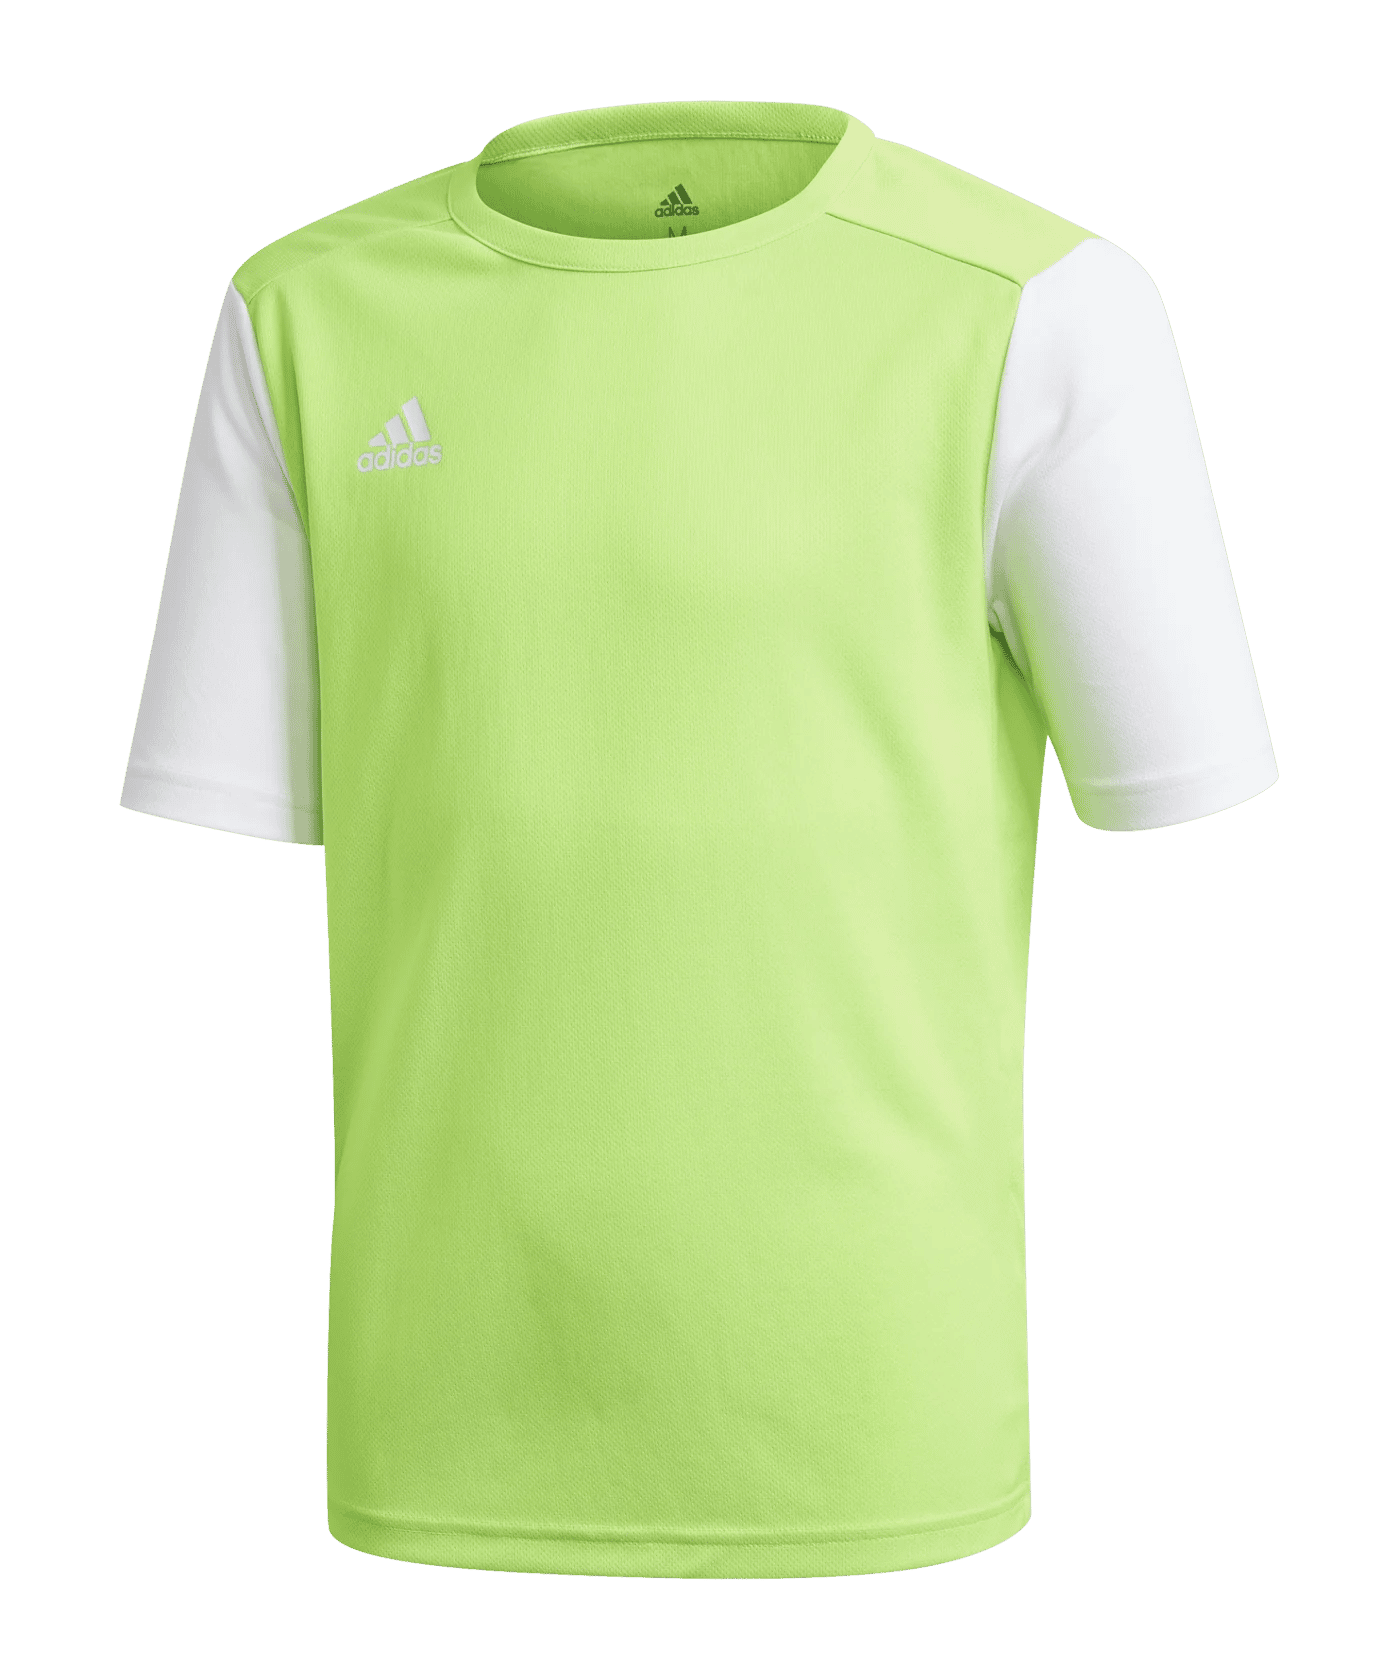 Adidas Kinder Trikot Estro 19 grün-weiß